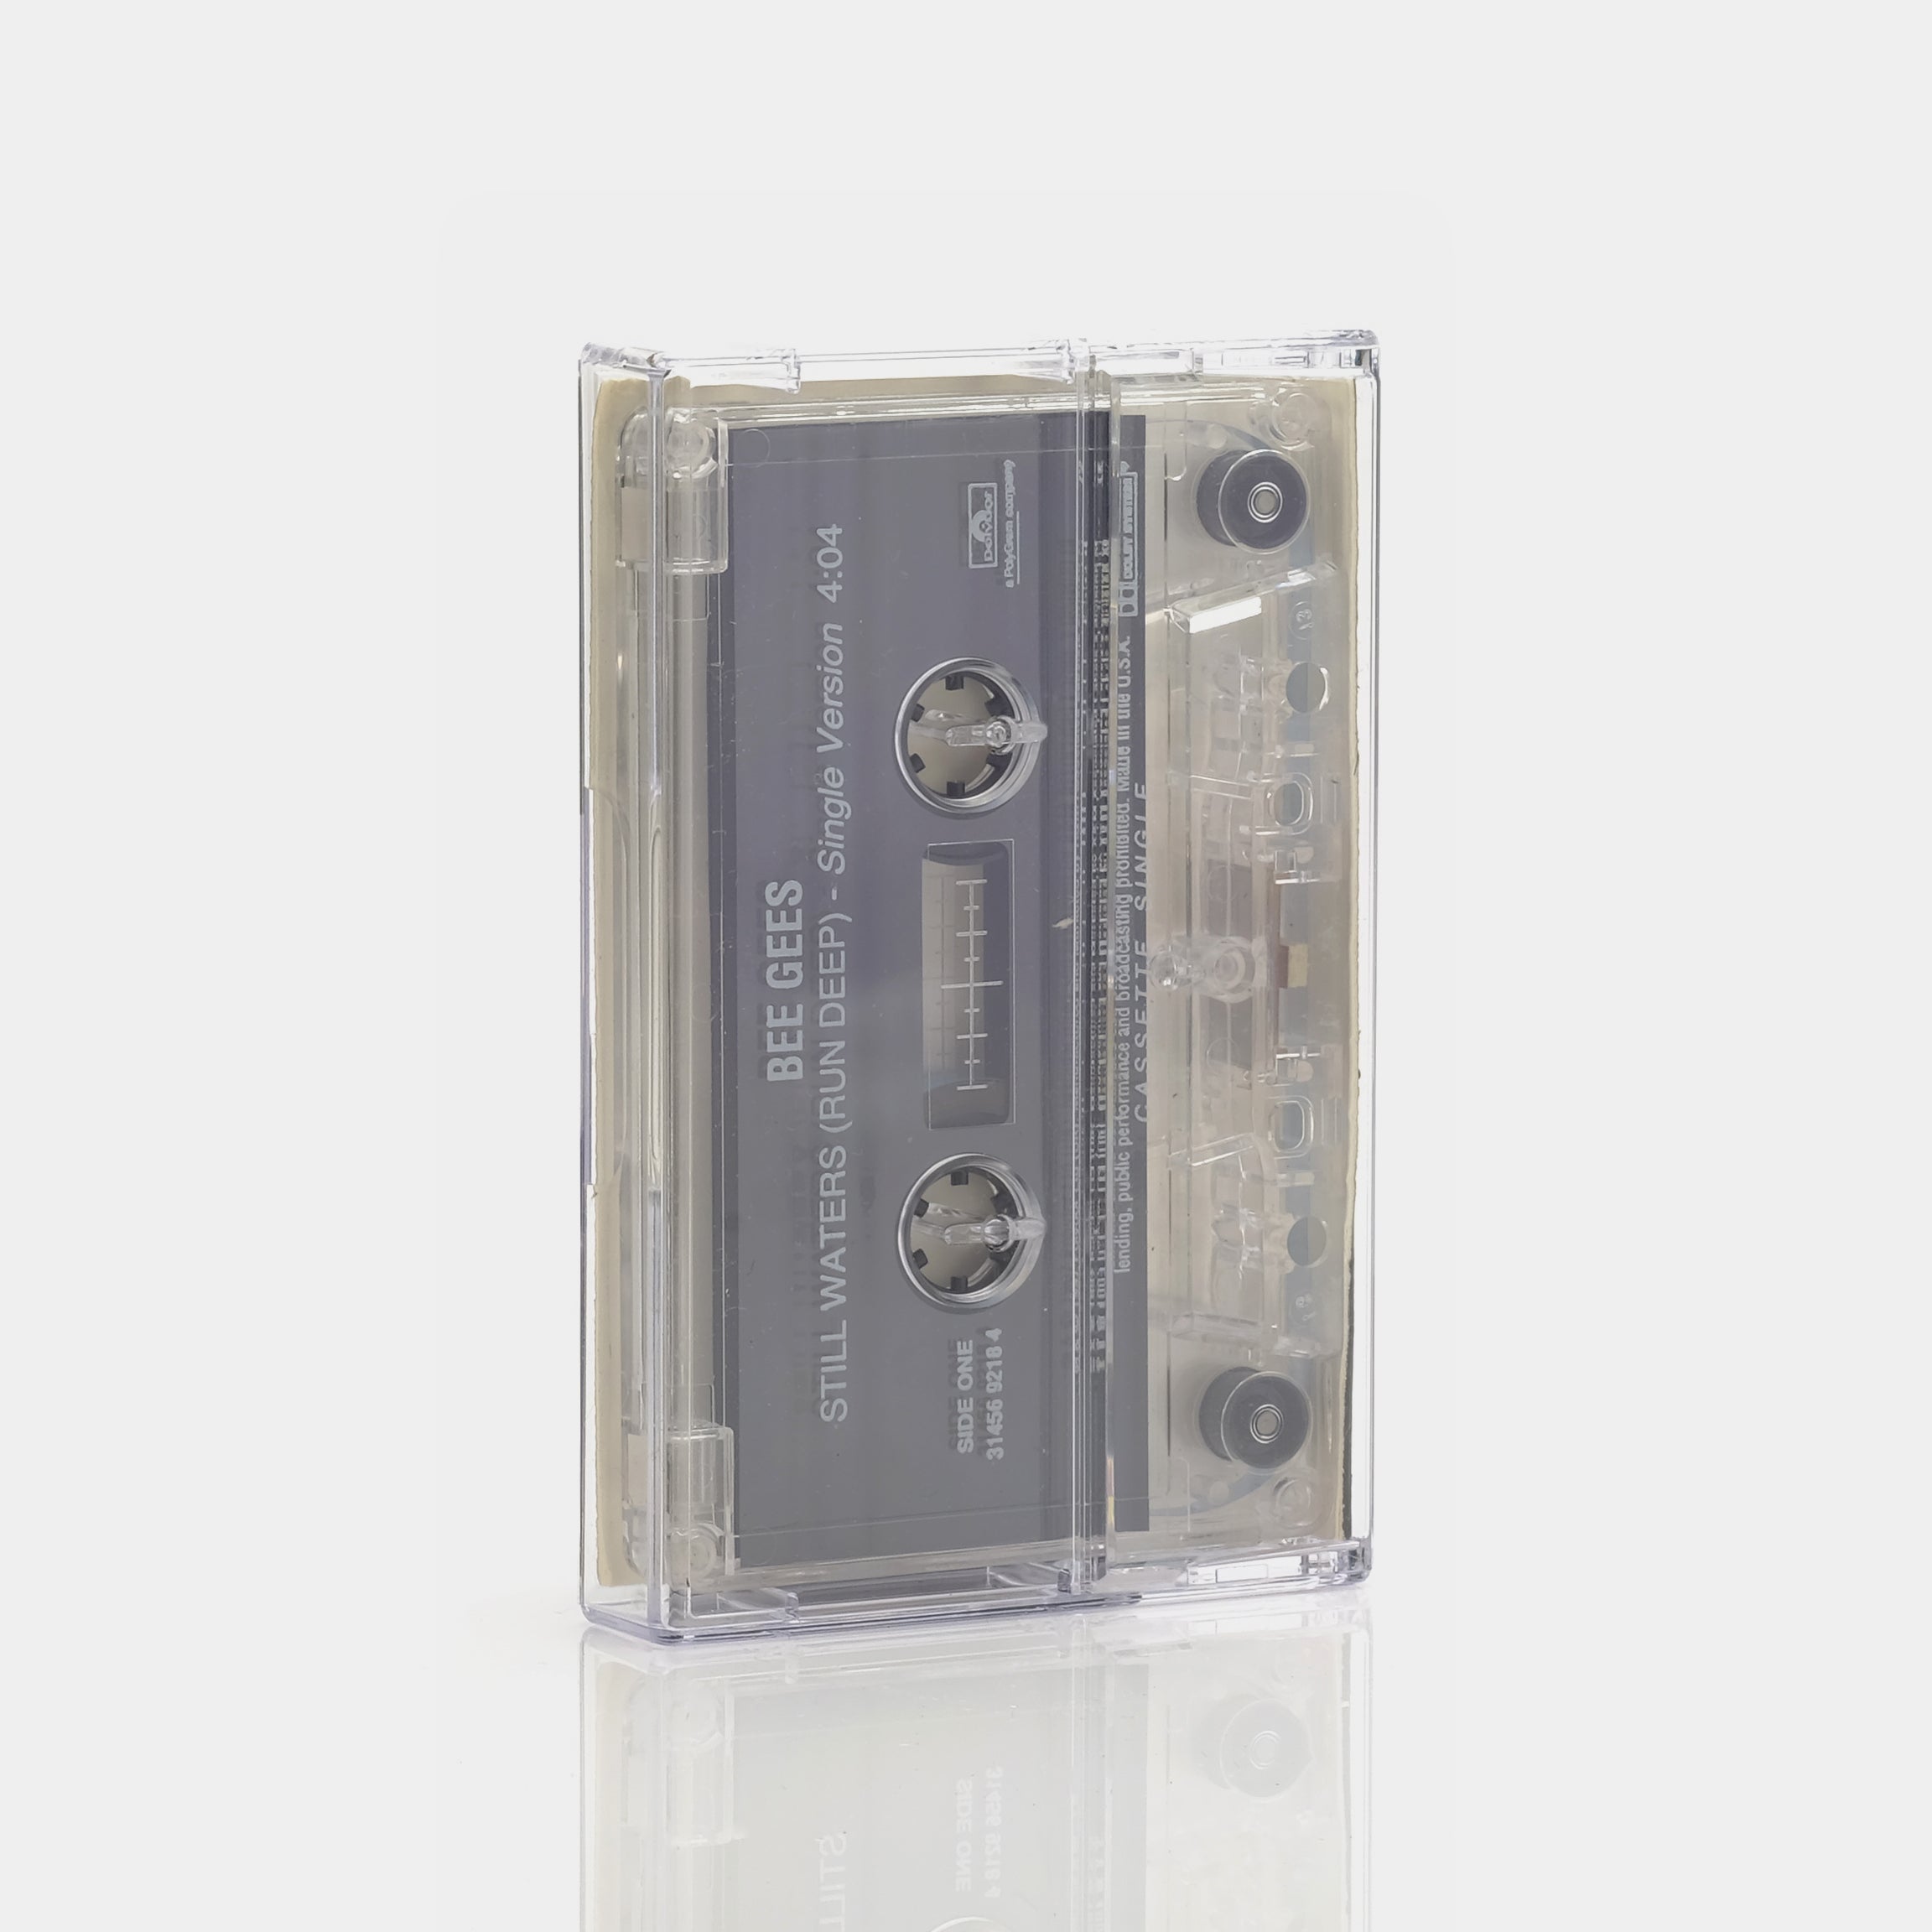 Bee Gees - Still Waters (Run Deep) Cassette Tape Single